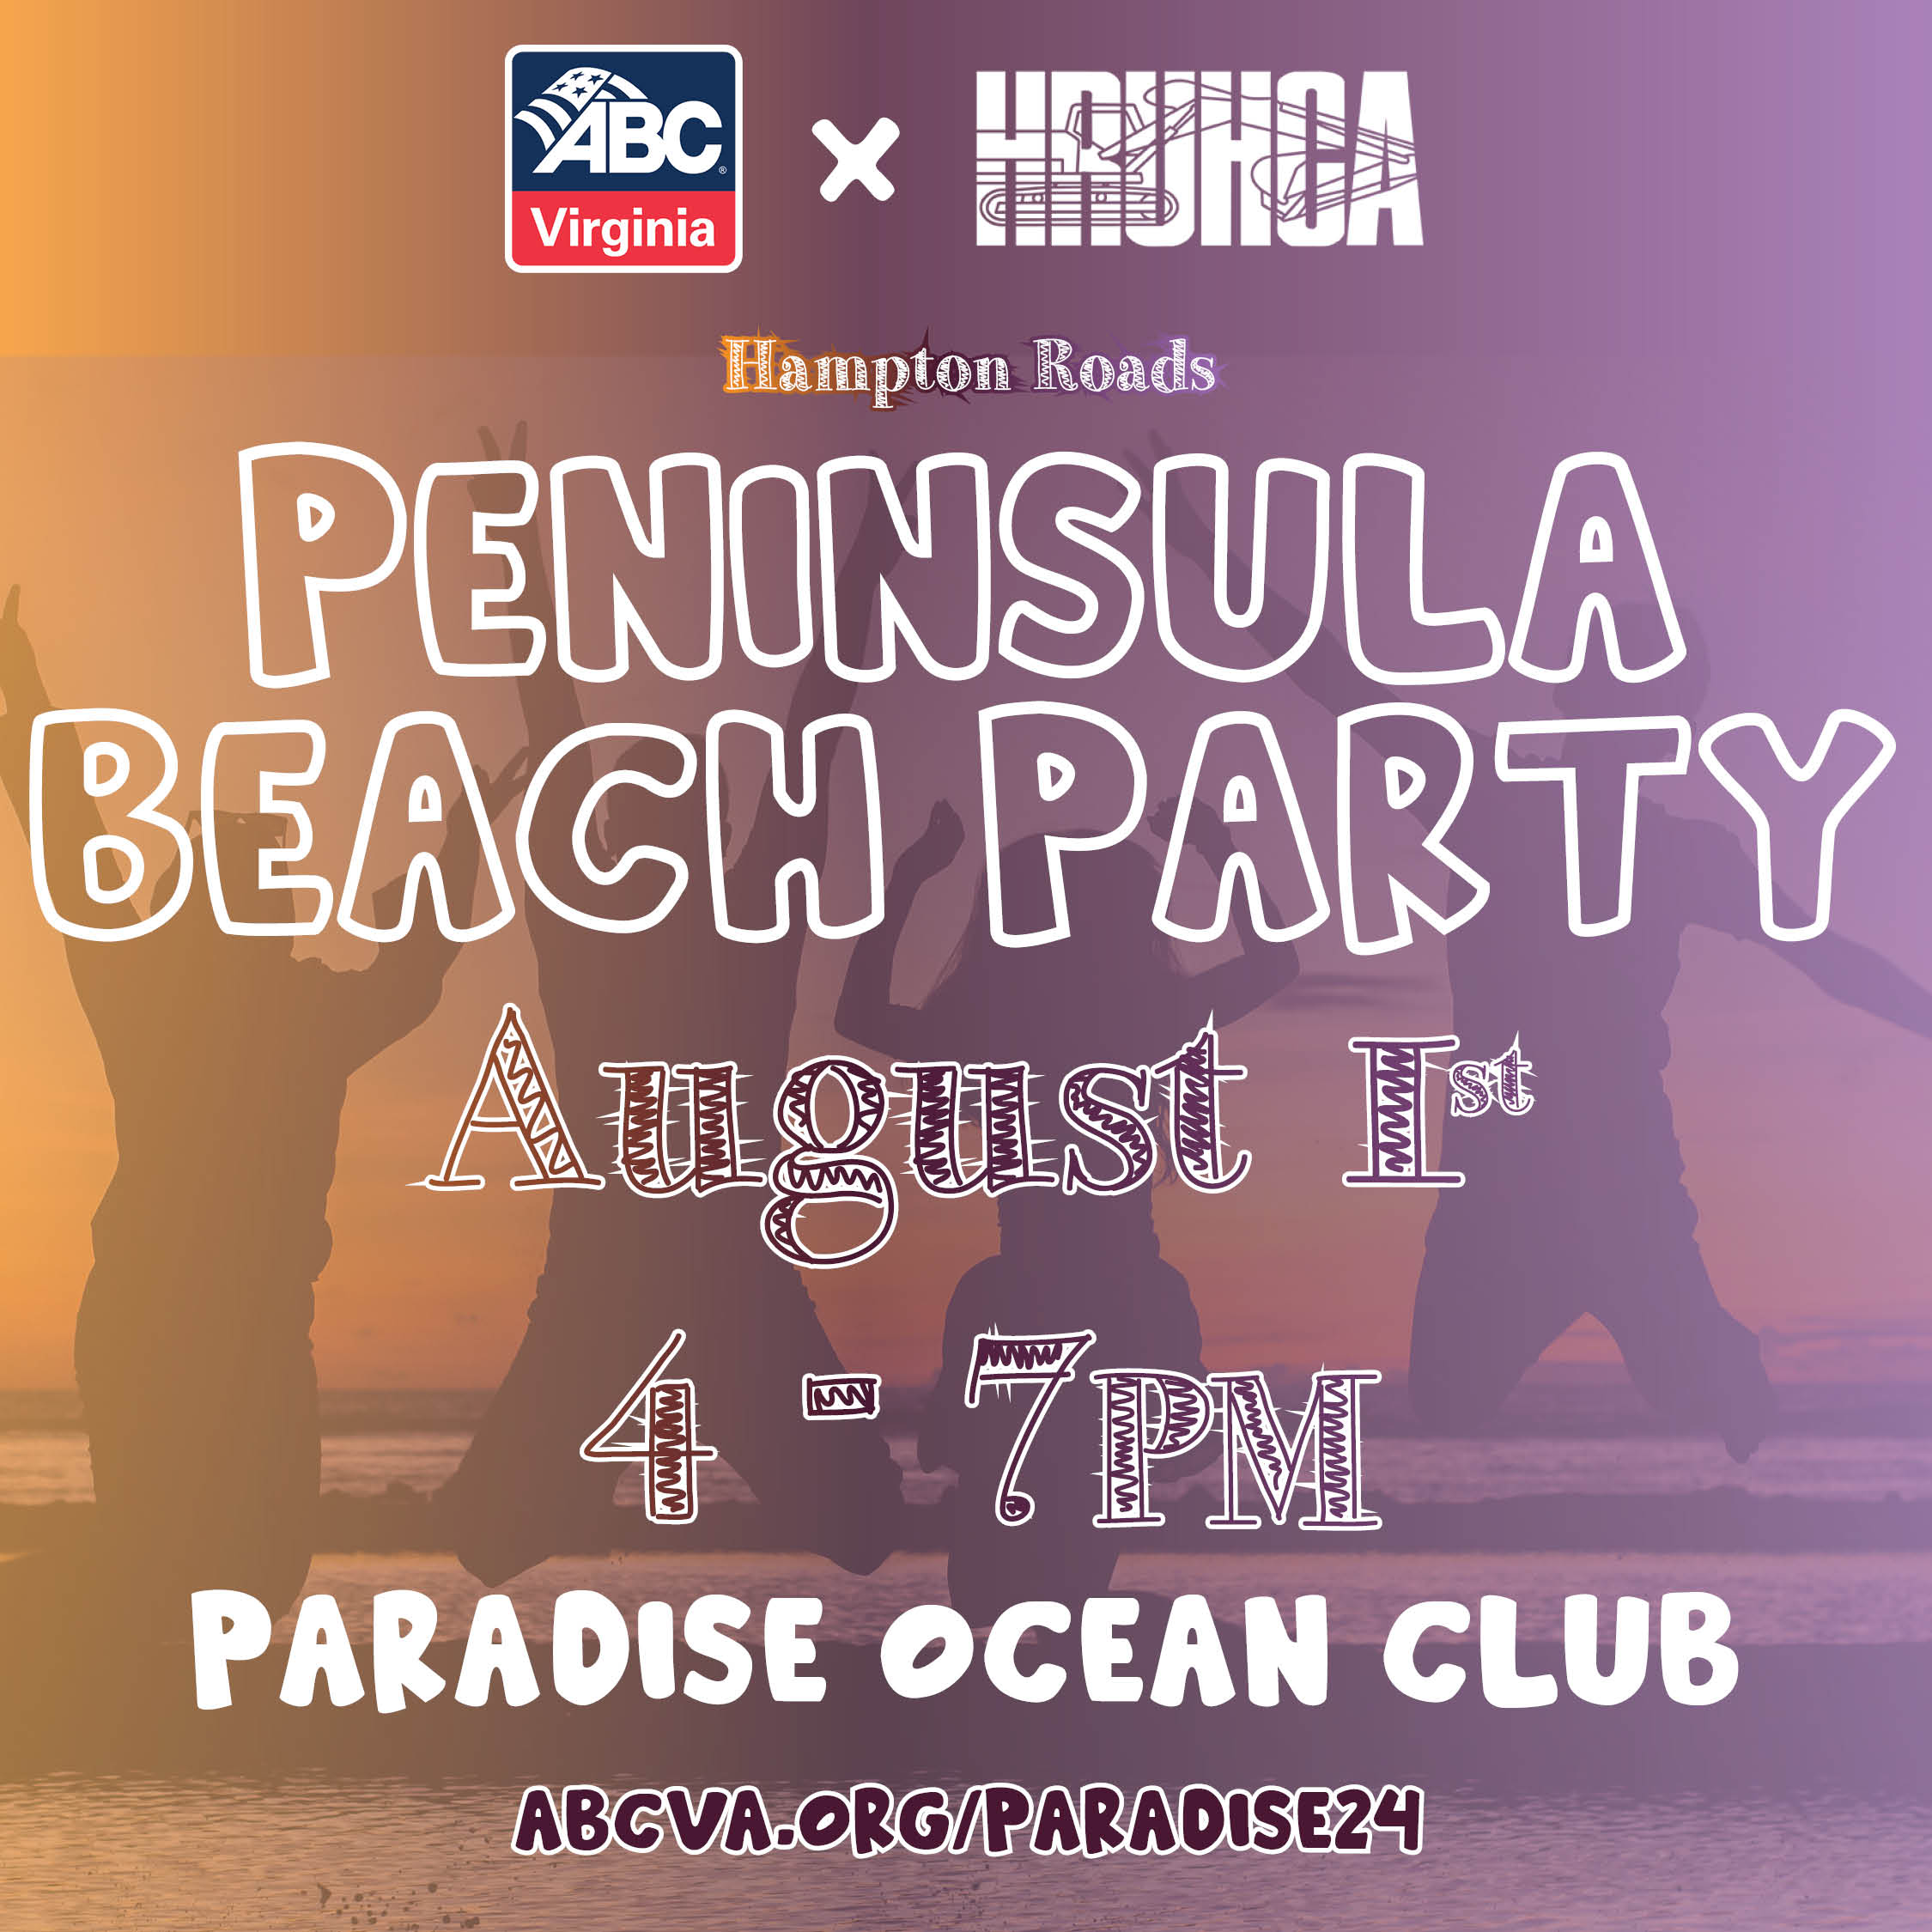 HR Peninsula Beach Party Aug 1 WEB